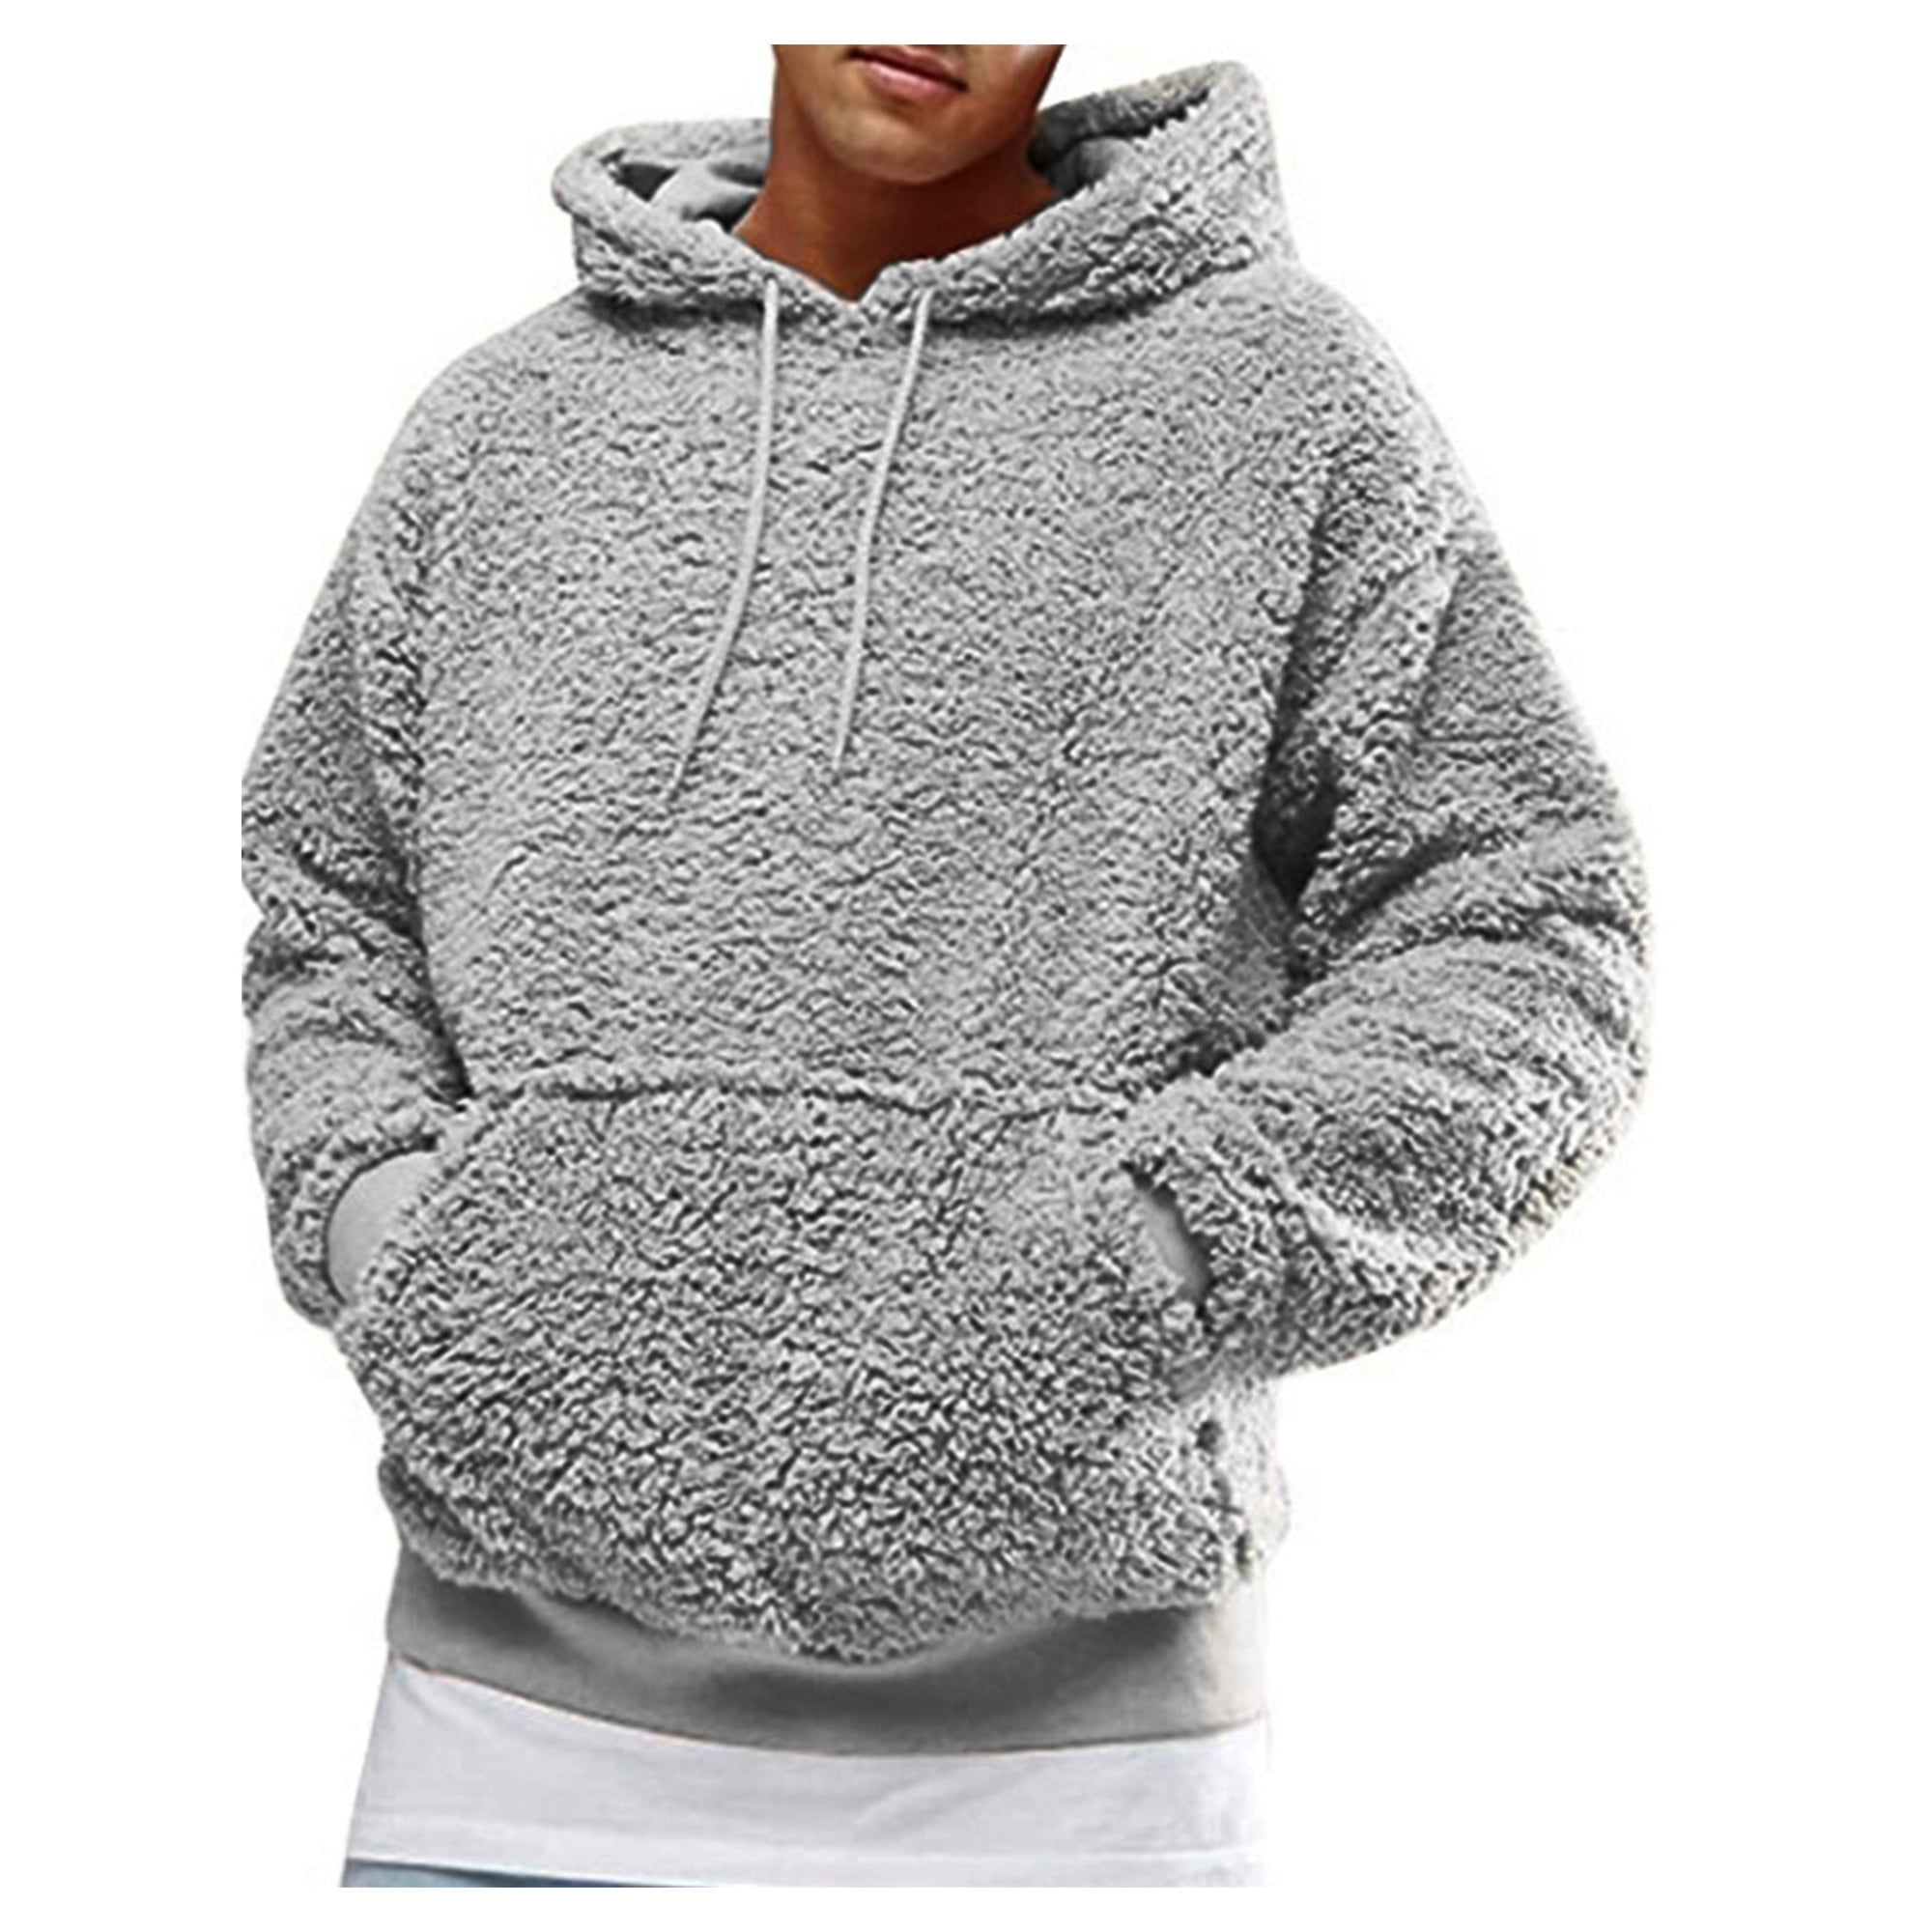 Men Fluffy Hoodie Casual Sweatshirt Outerwear Pullover Warm Jumper Coat Jacket Blouse Hooded Tops - Walmart.com